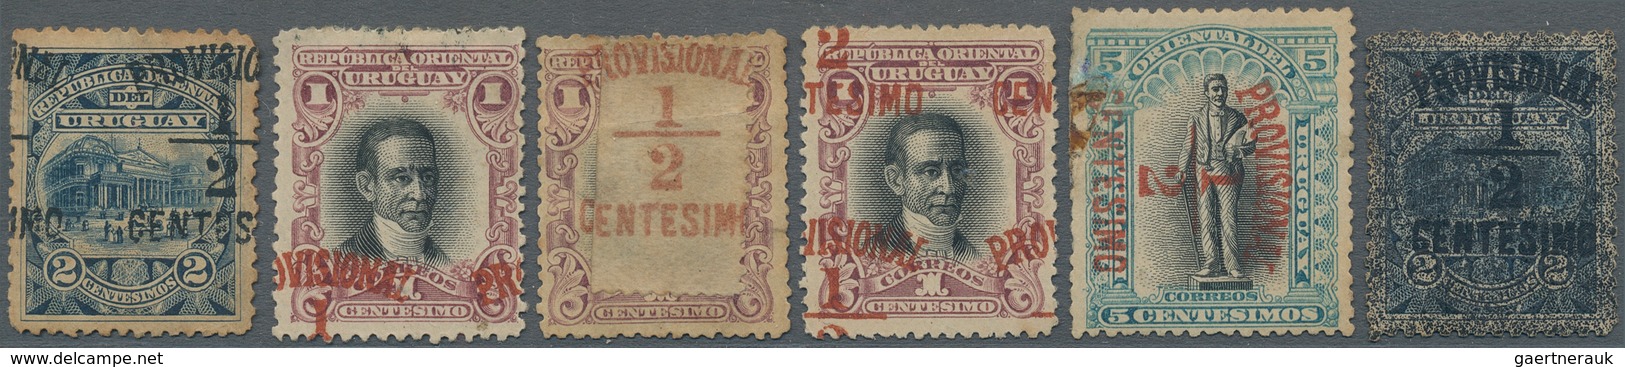 Uruguay: 1898, Provisional Overprints, Lot Of 13 Stamps Incl. Overprint On Debris, Shifted/divided O - Uruguay